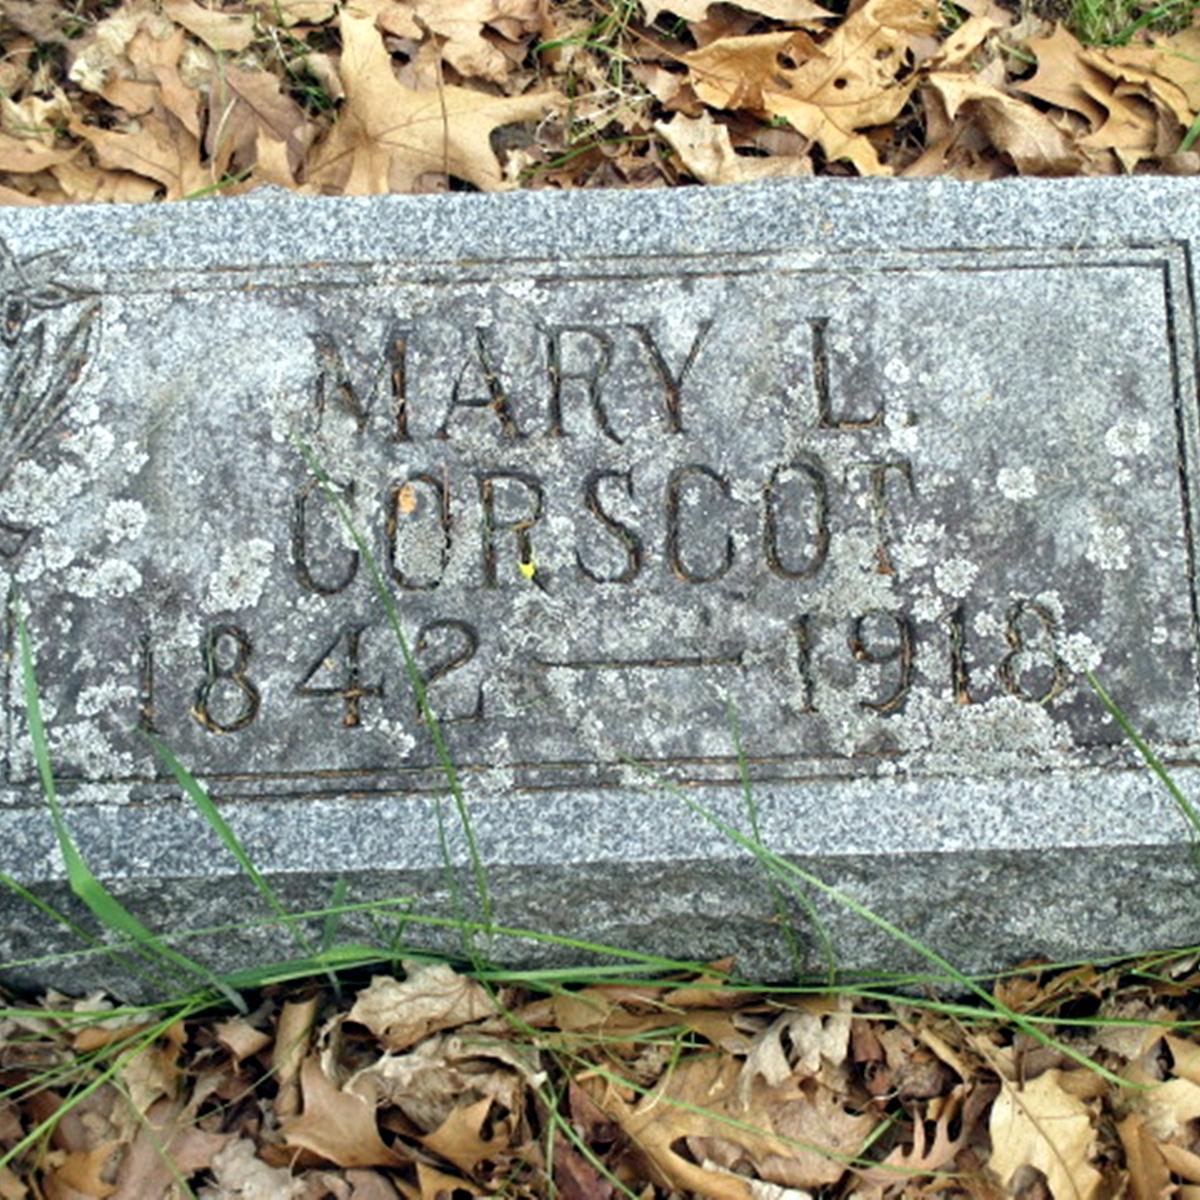 Grave of Maria Lankester